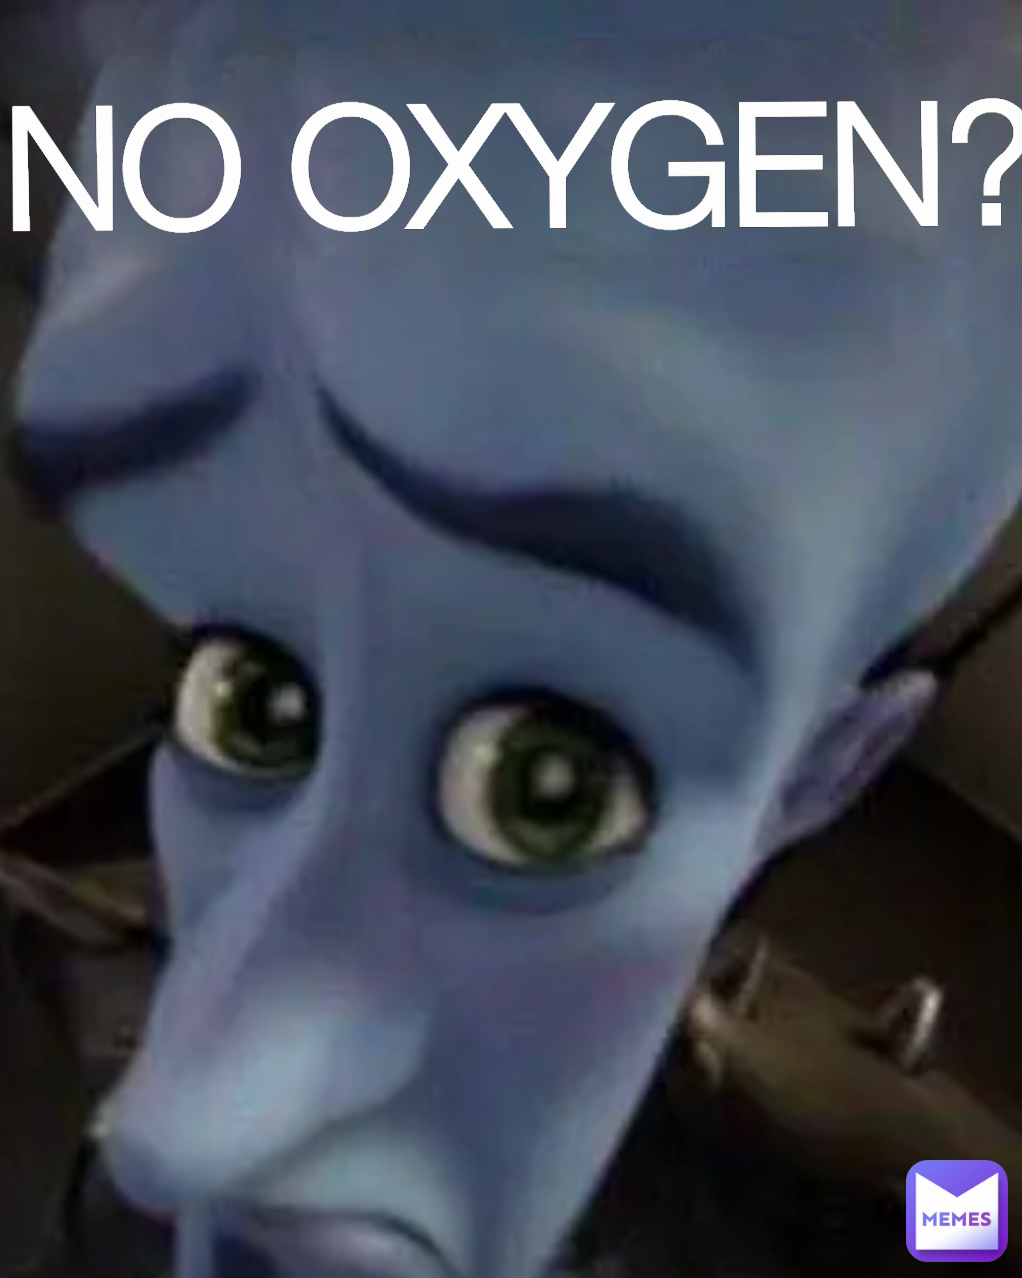 NO OXYGEN?